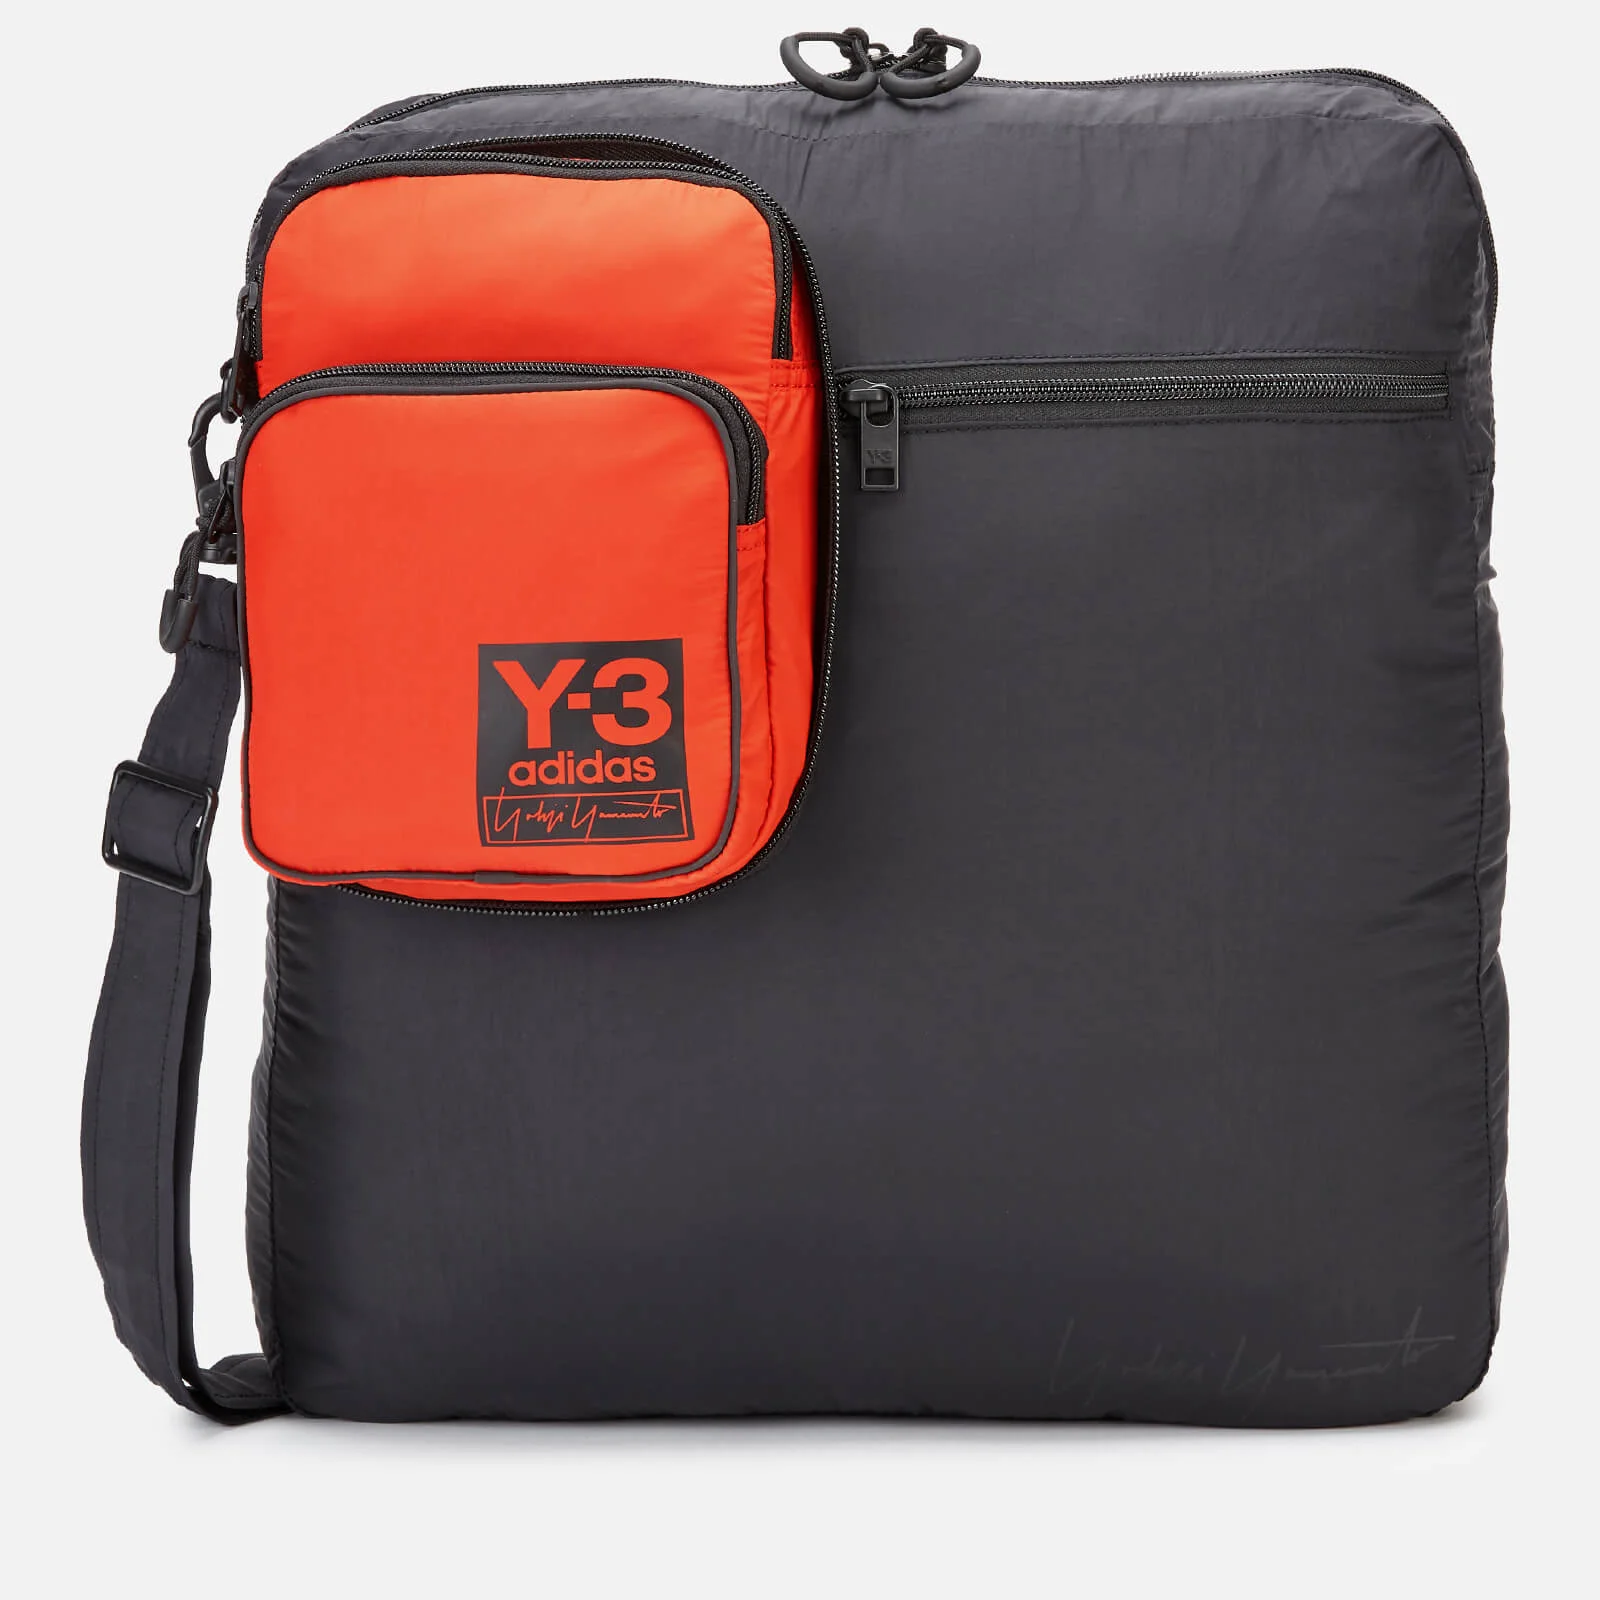 Y-3 Men's PK Airliner Bag - Icon Orange Image 1